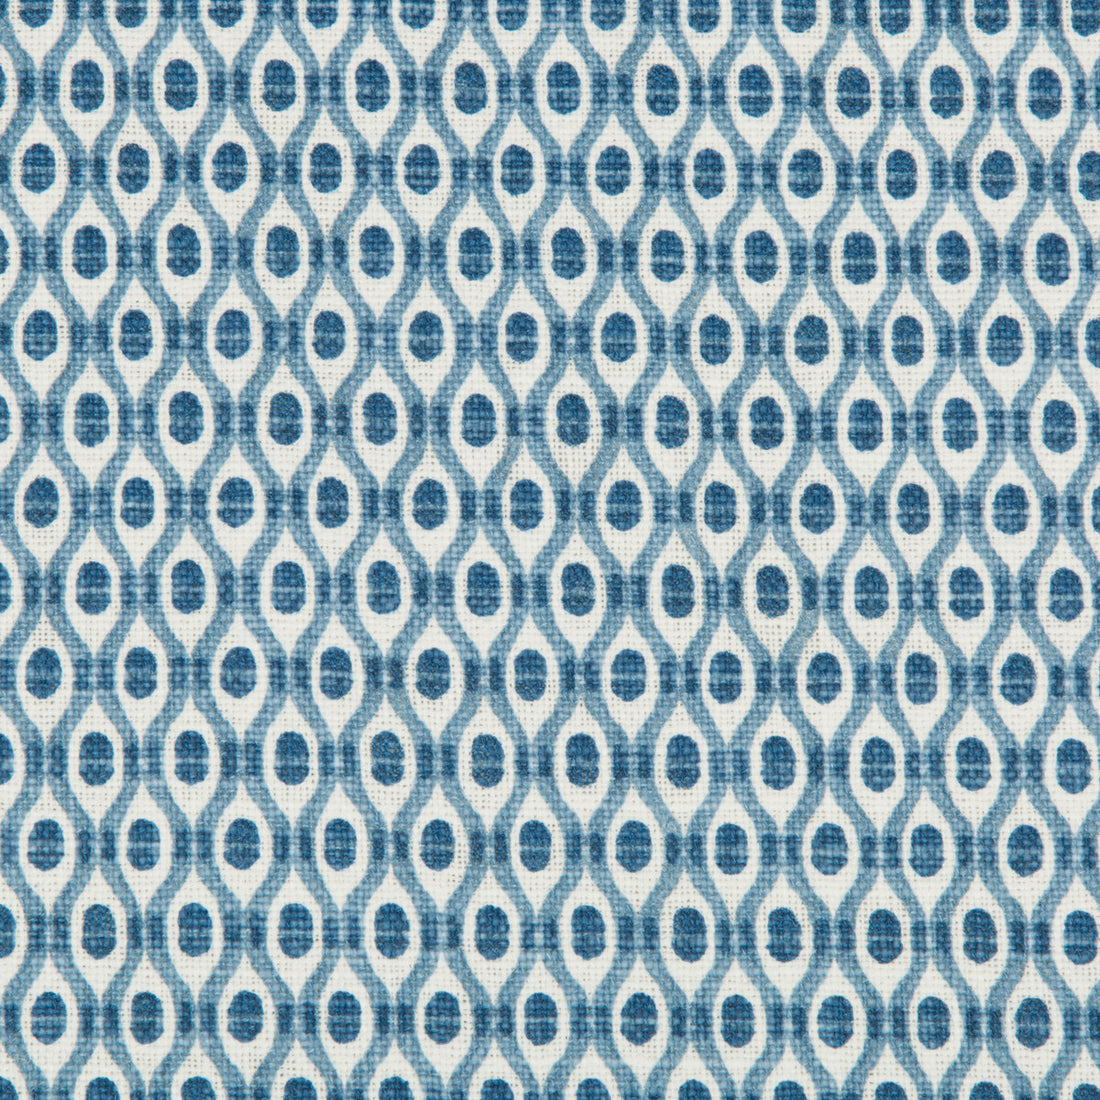 Kravet Basics fabric in hanapepe-5 color - pattern HANAPEPE.5.0 - by Kravet Basics